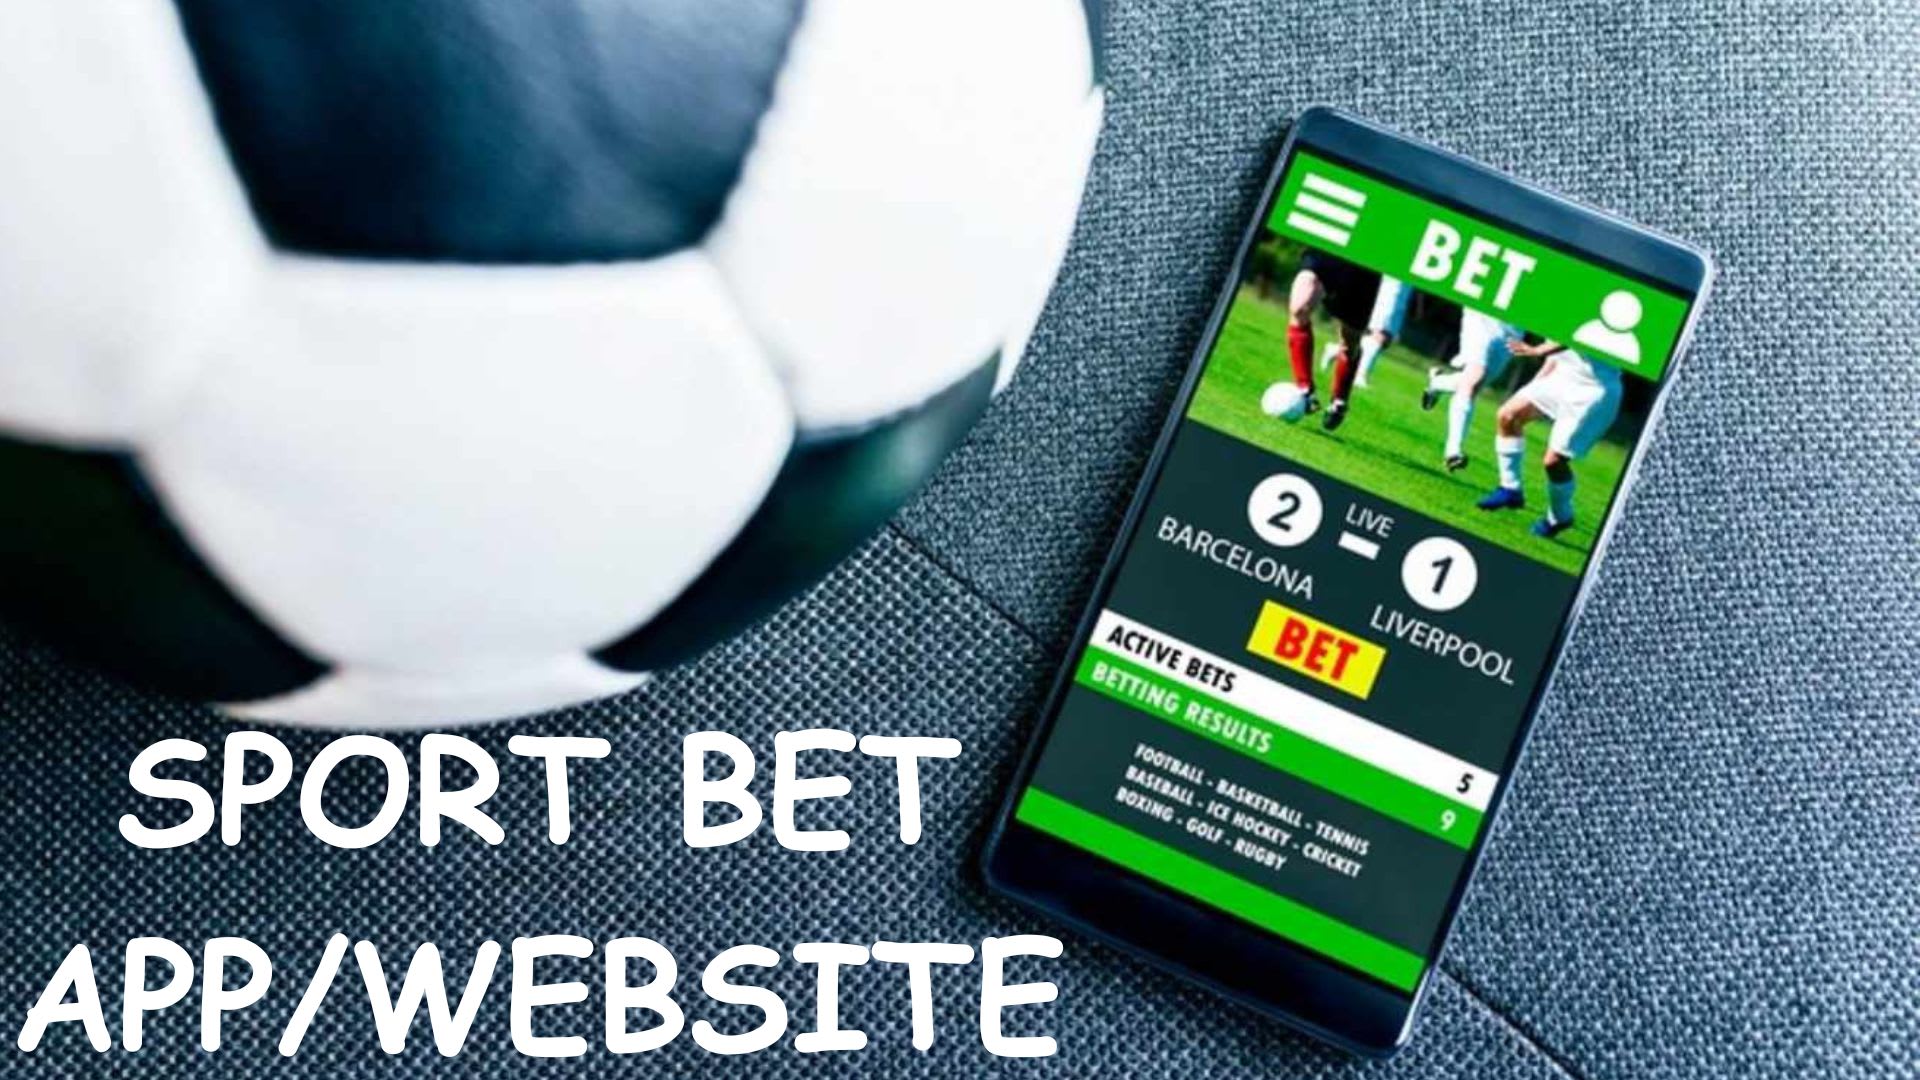 Web app bet app, clone sport bet website and bet app, bet 365,